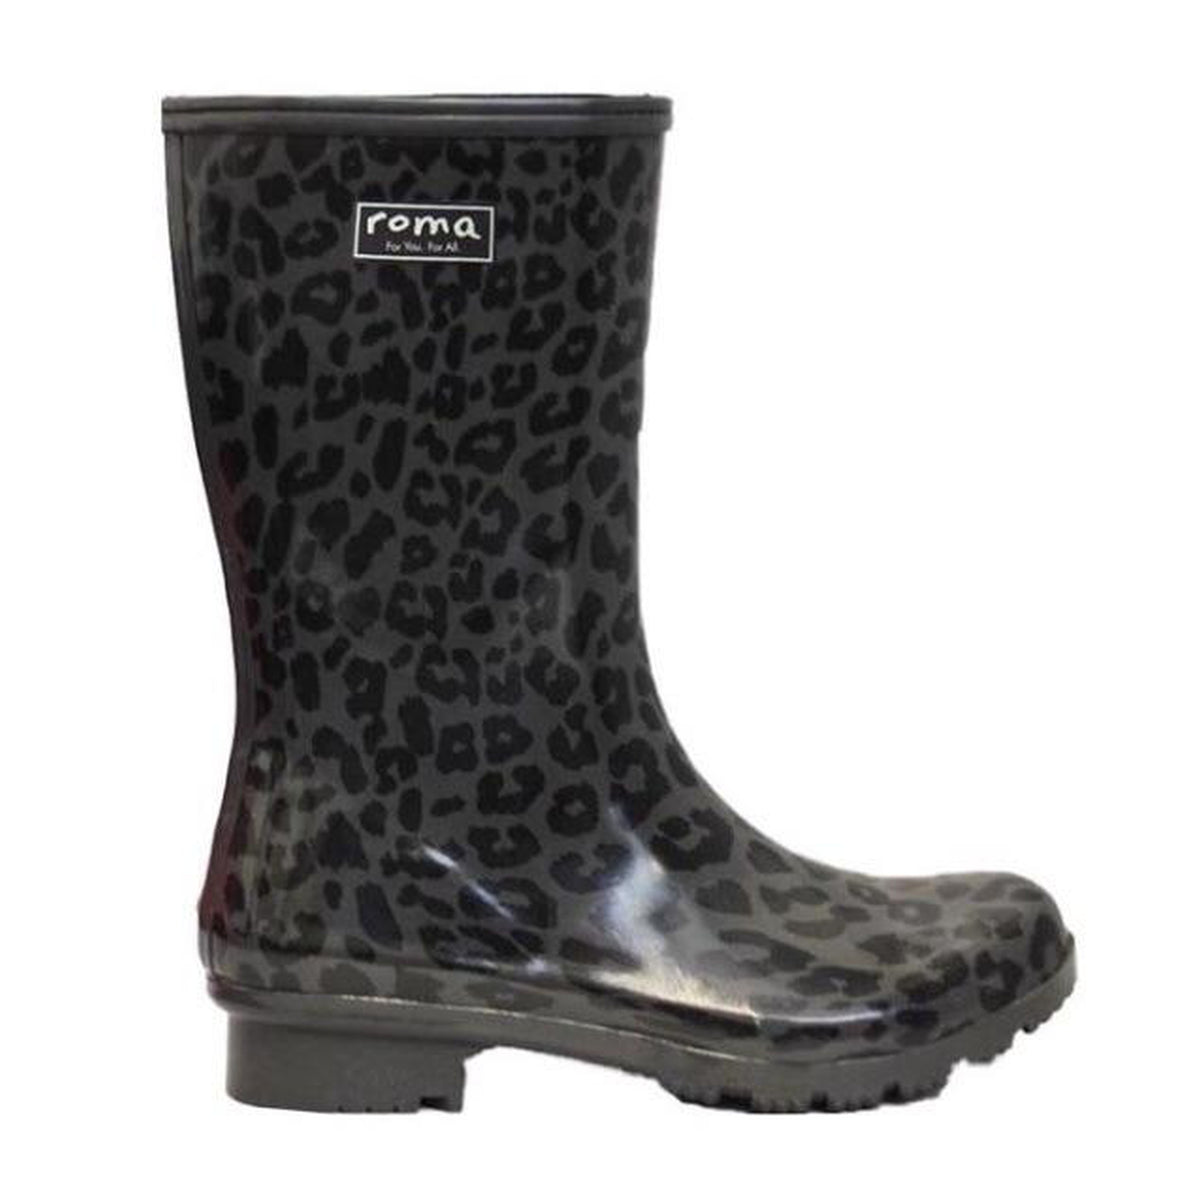 emma rain boot